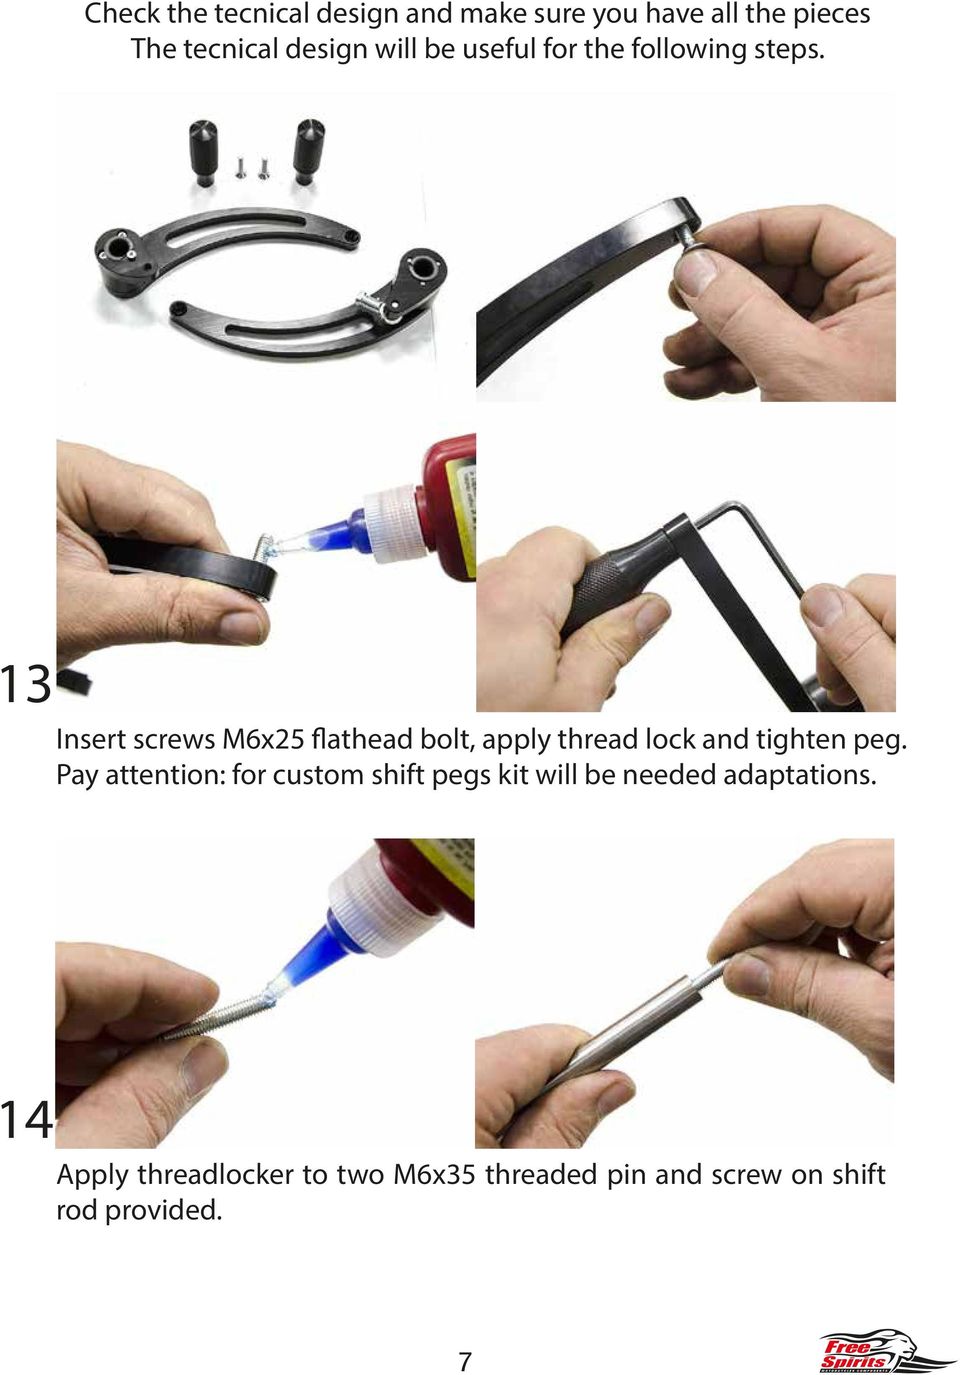 13 Insert screws M6x25 flathead bolt, apply thread lock and tighten peg.